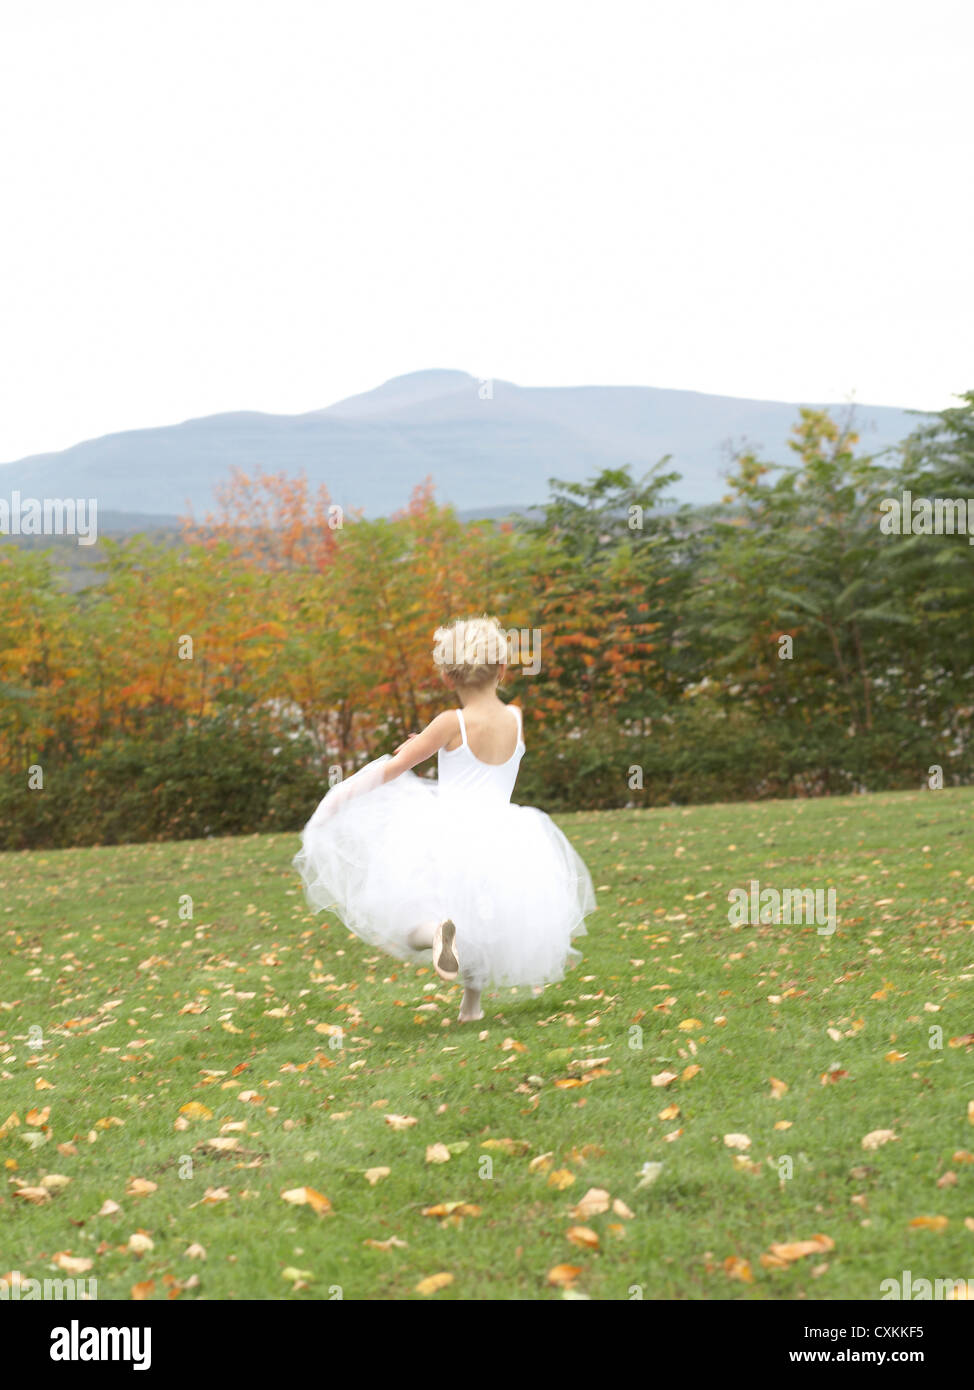 girl running in ballet costume in field Stock Photo